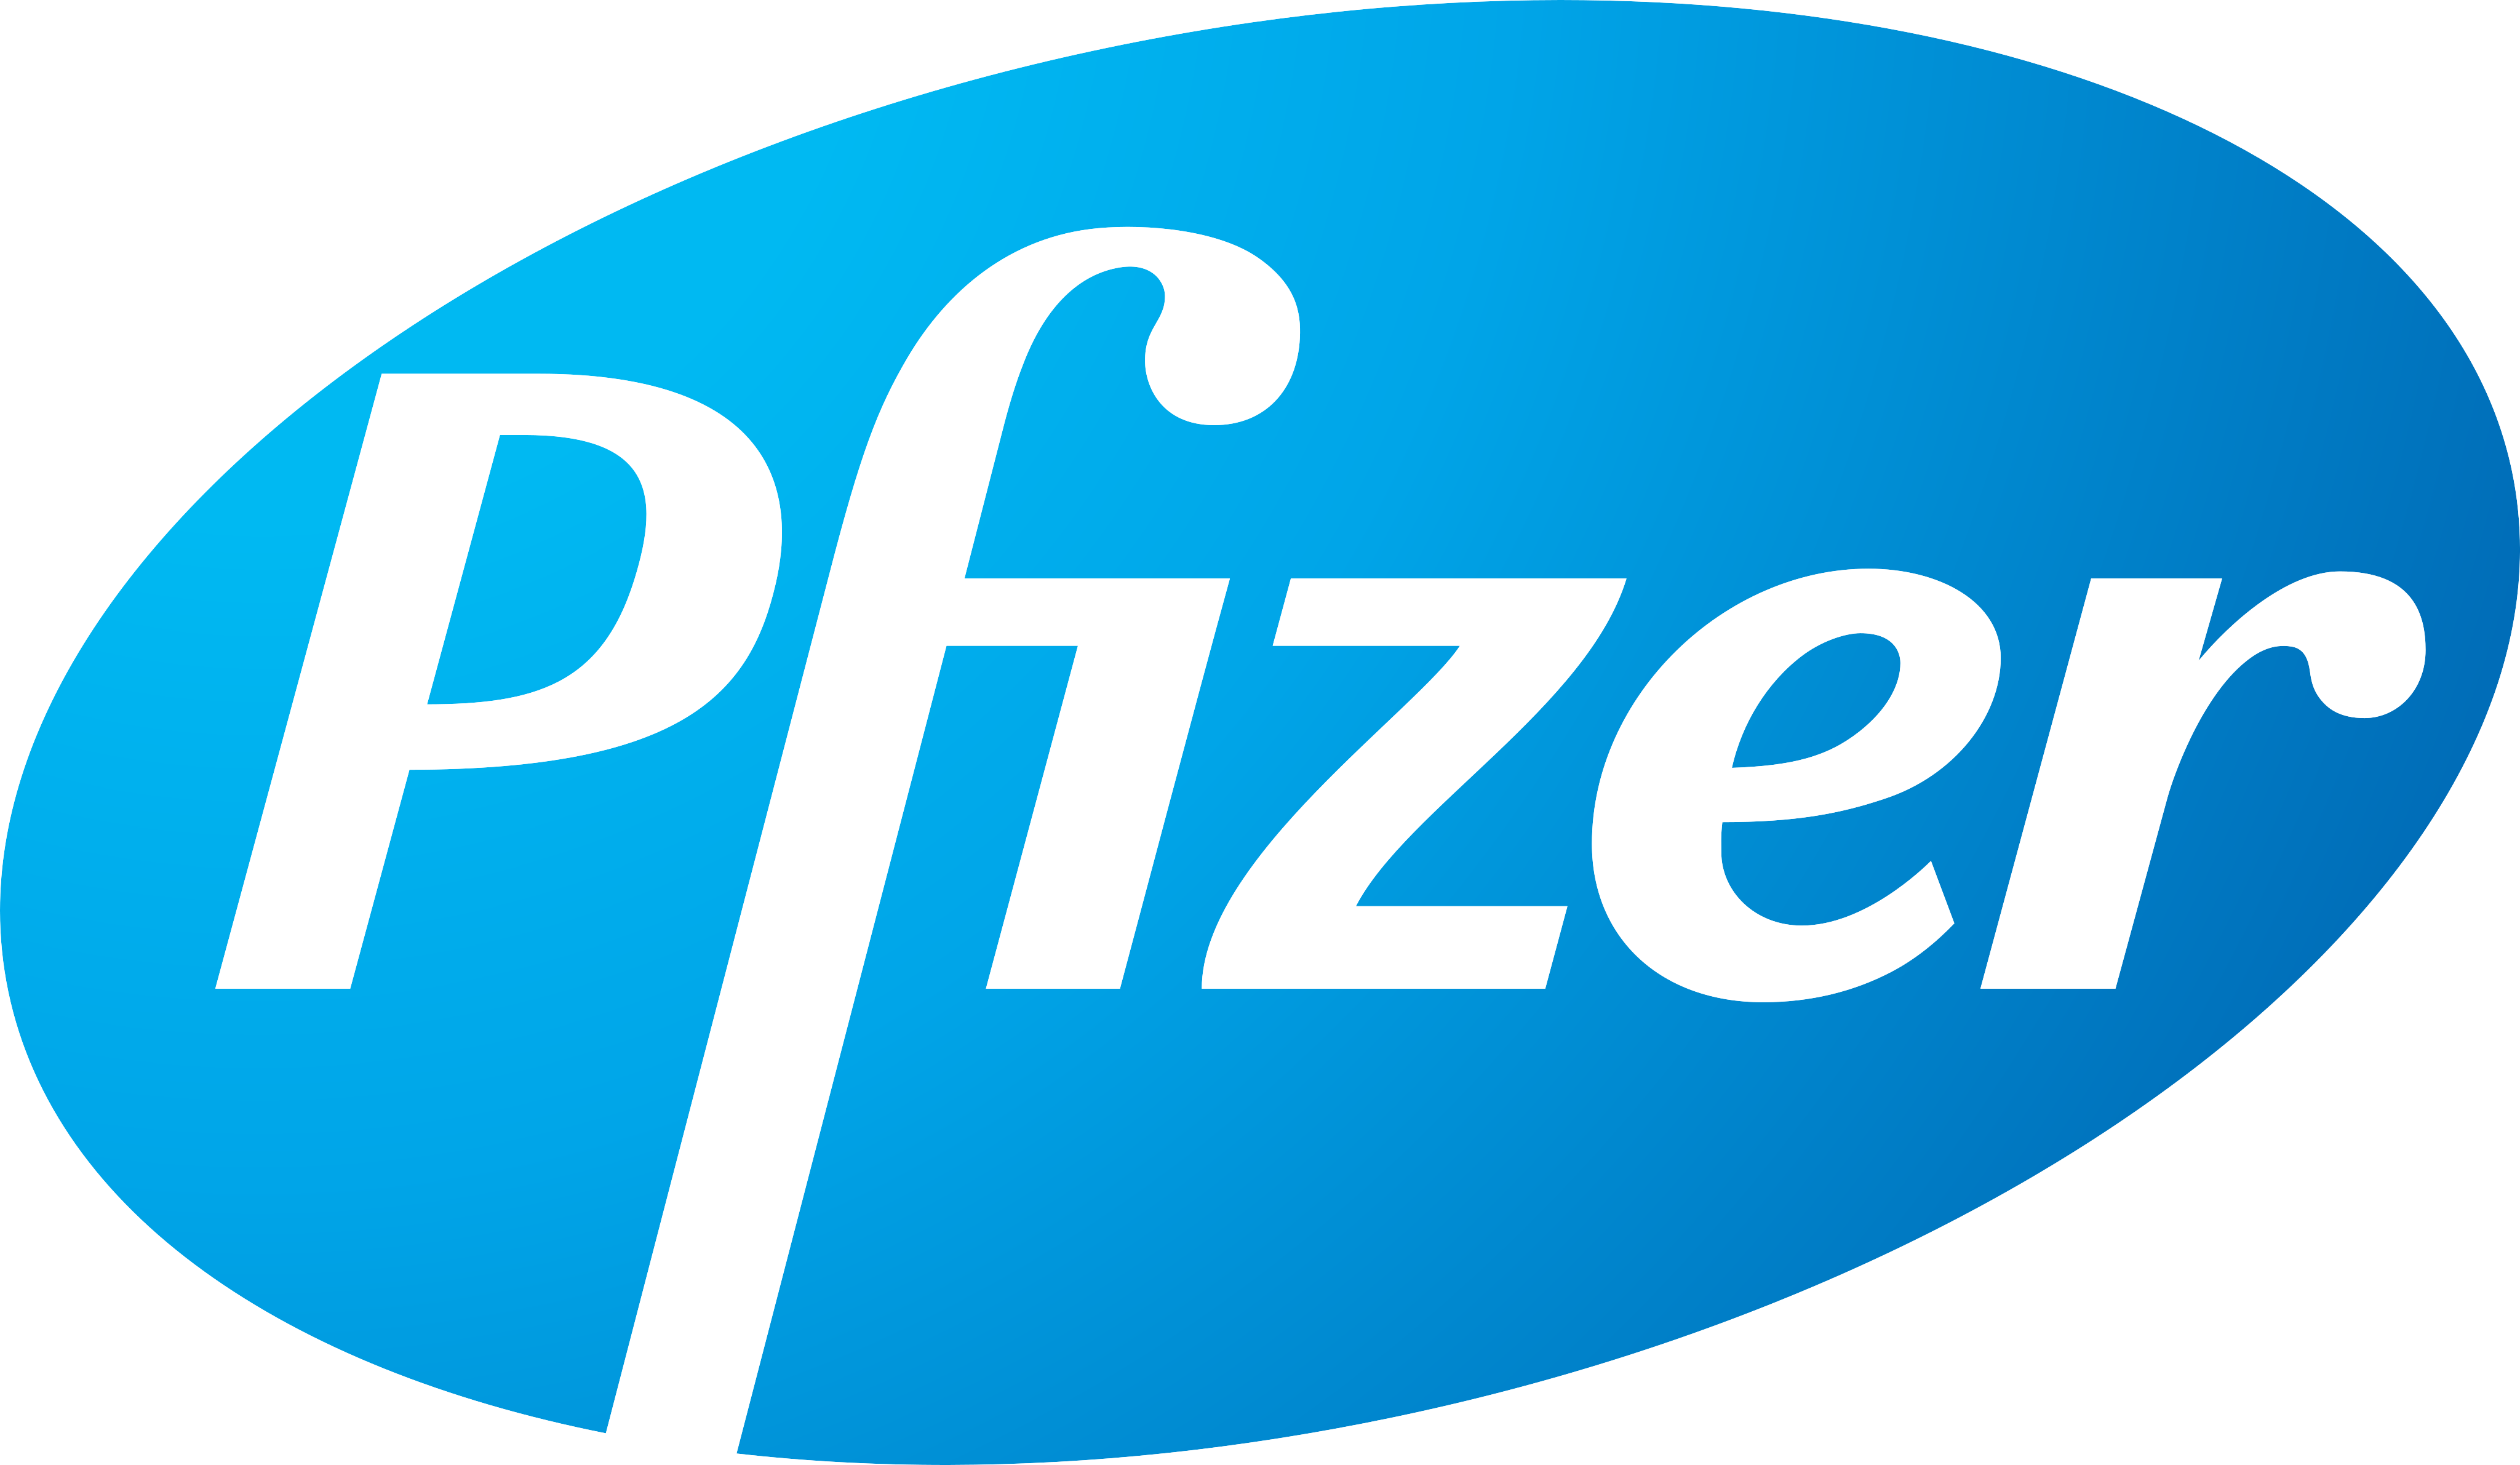 pfizer logo - Pfizer Logo